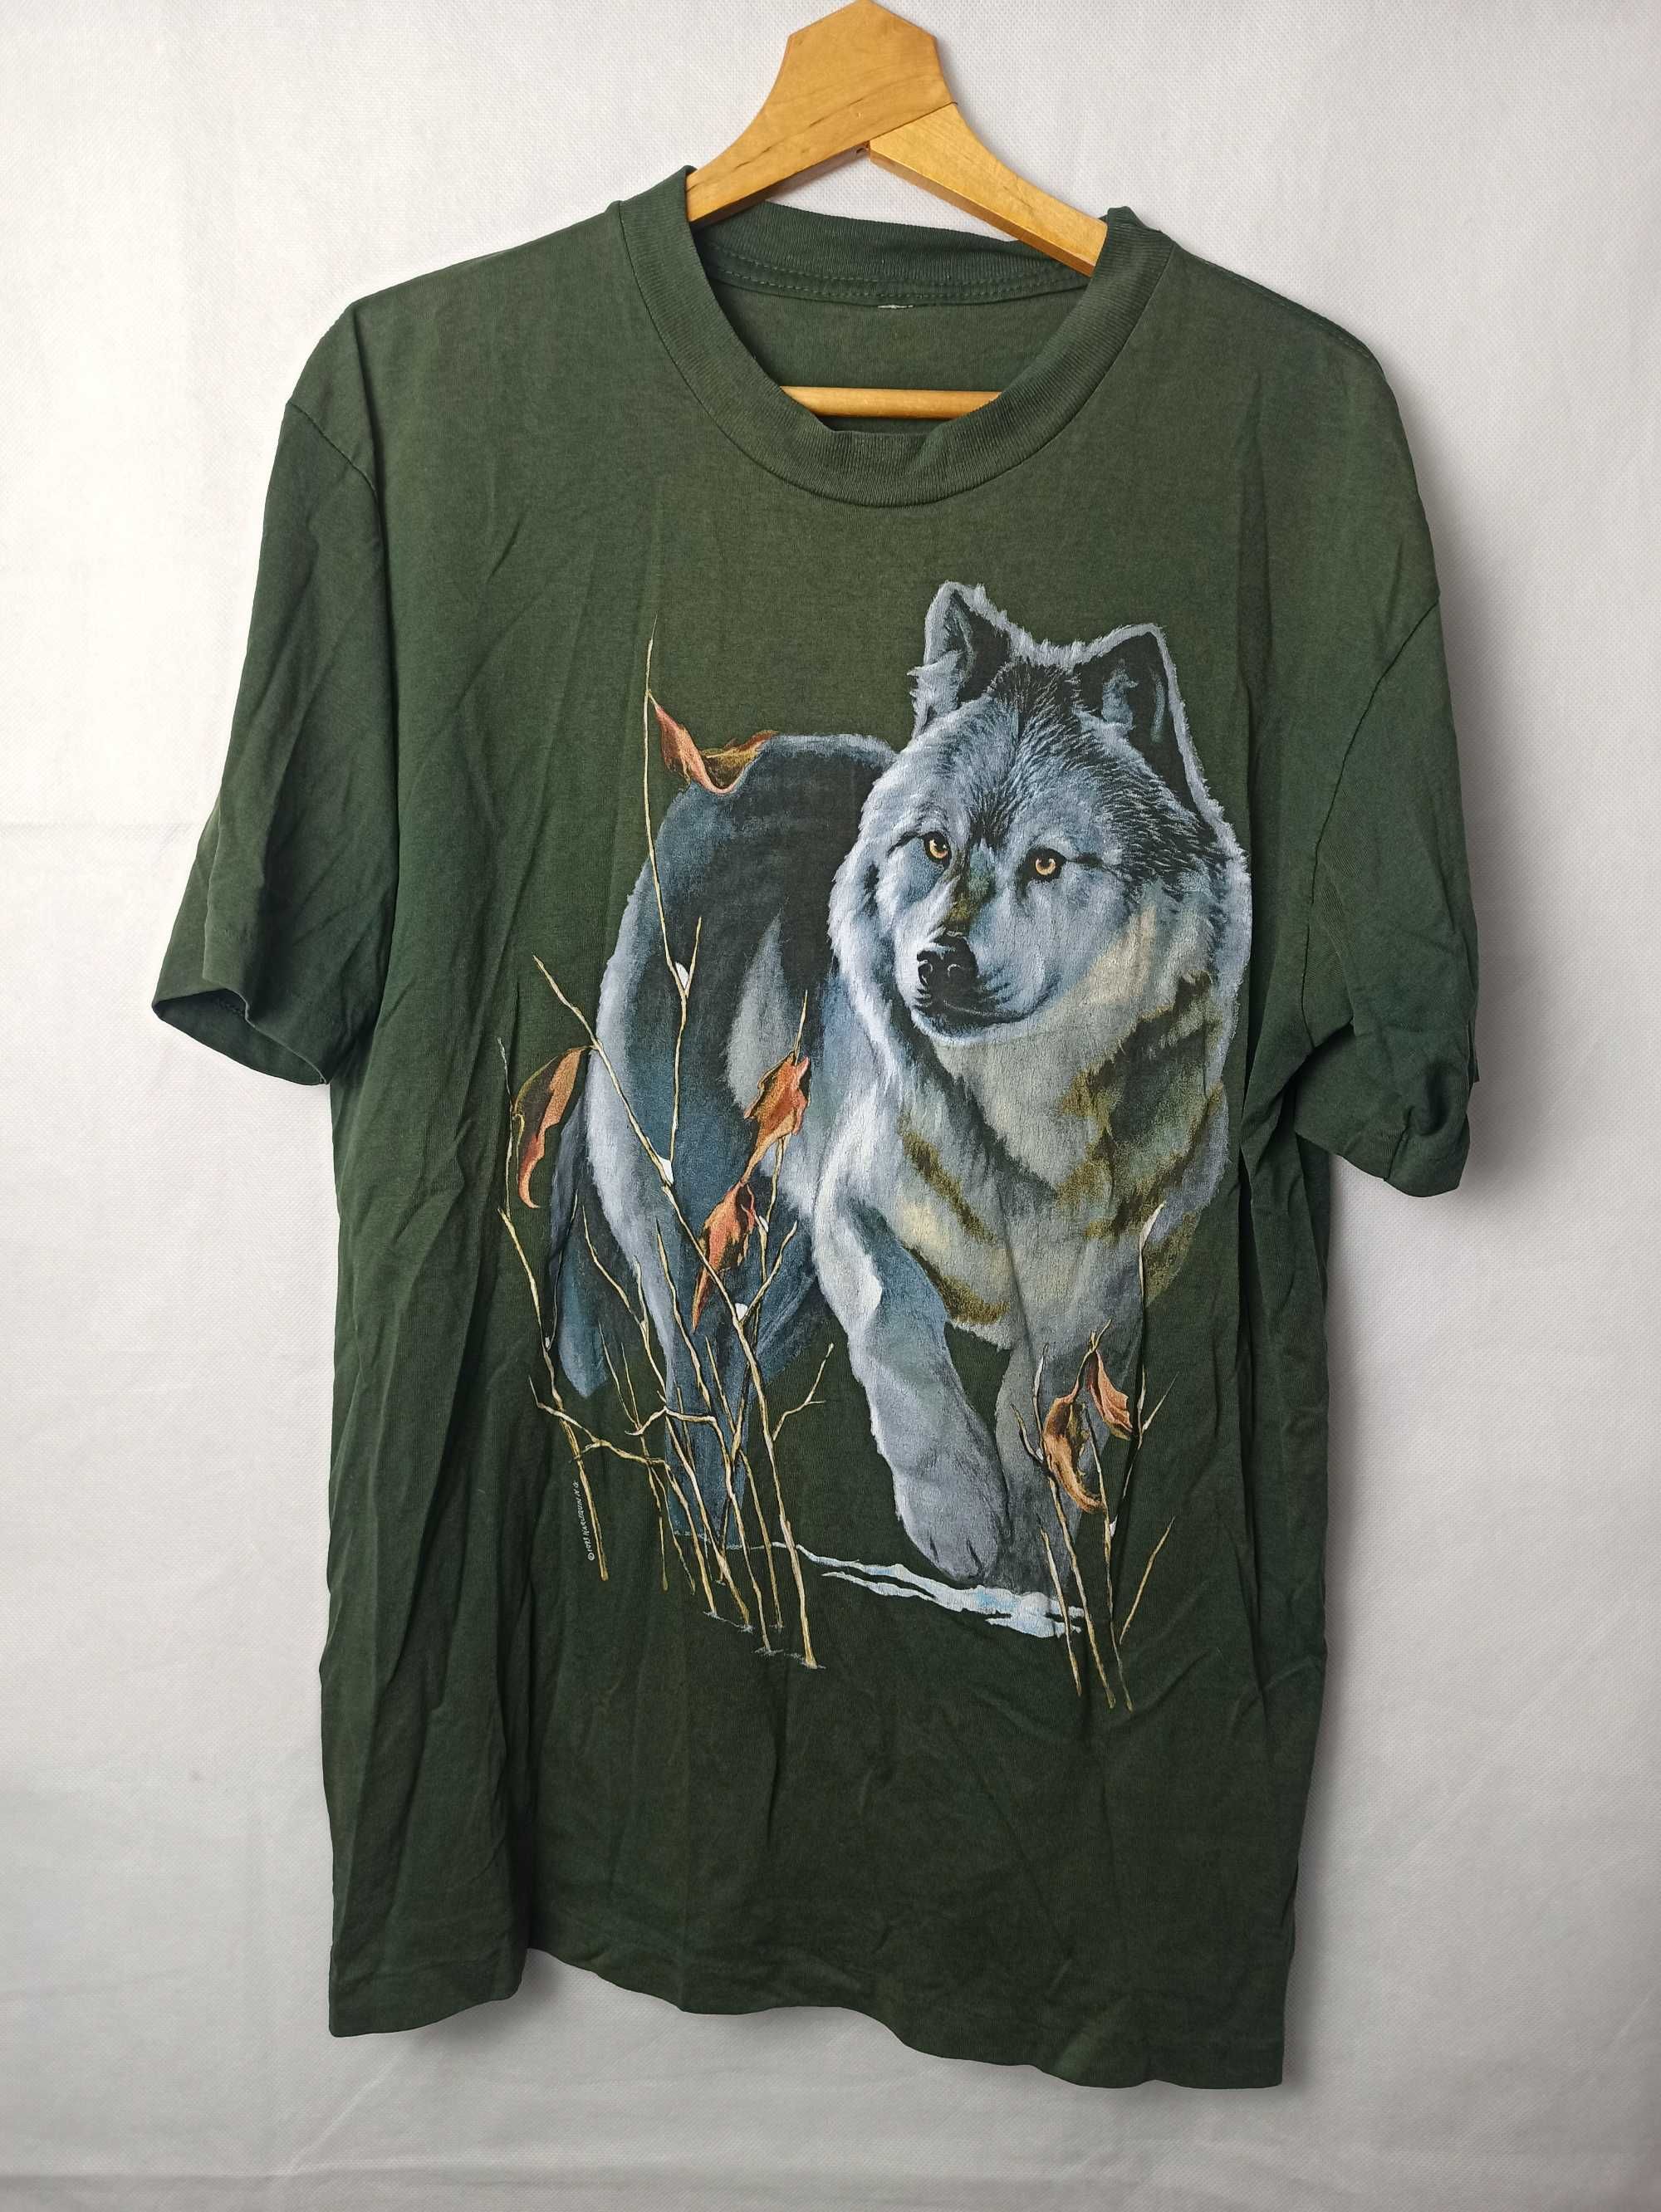 90s Vintage Wolf T-shirt Cottagecore Koszulka z Wilkiem